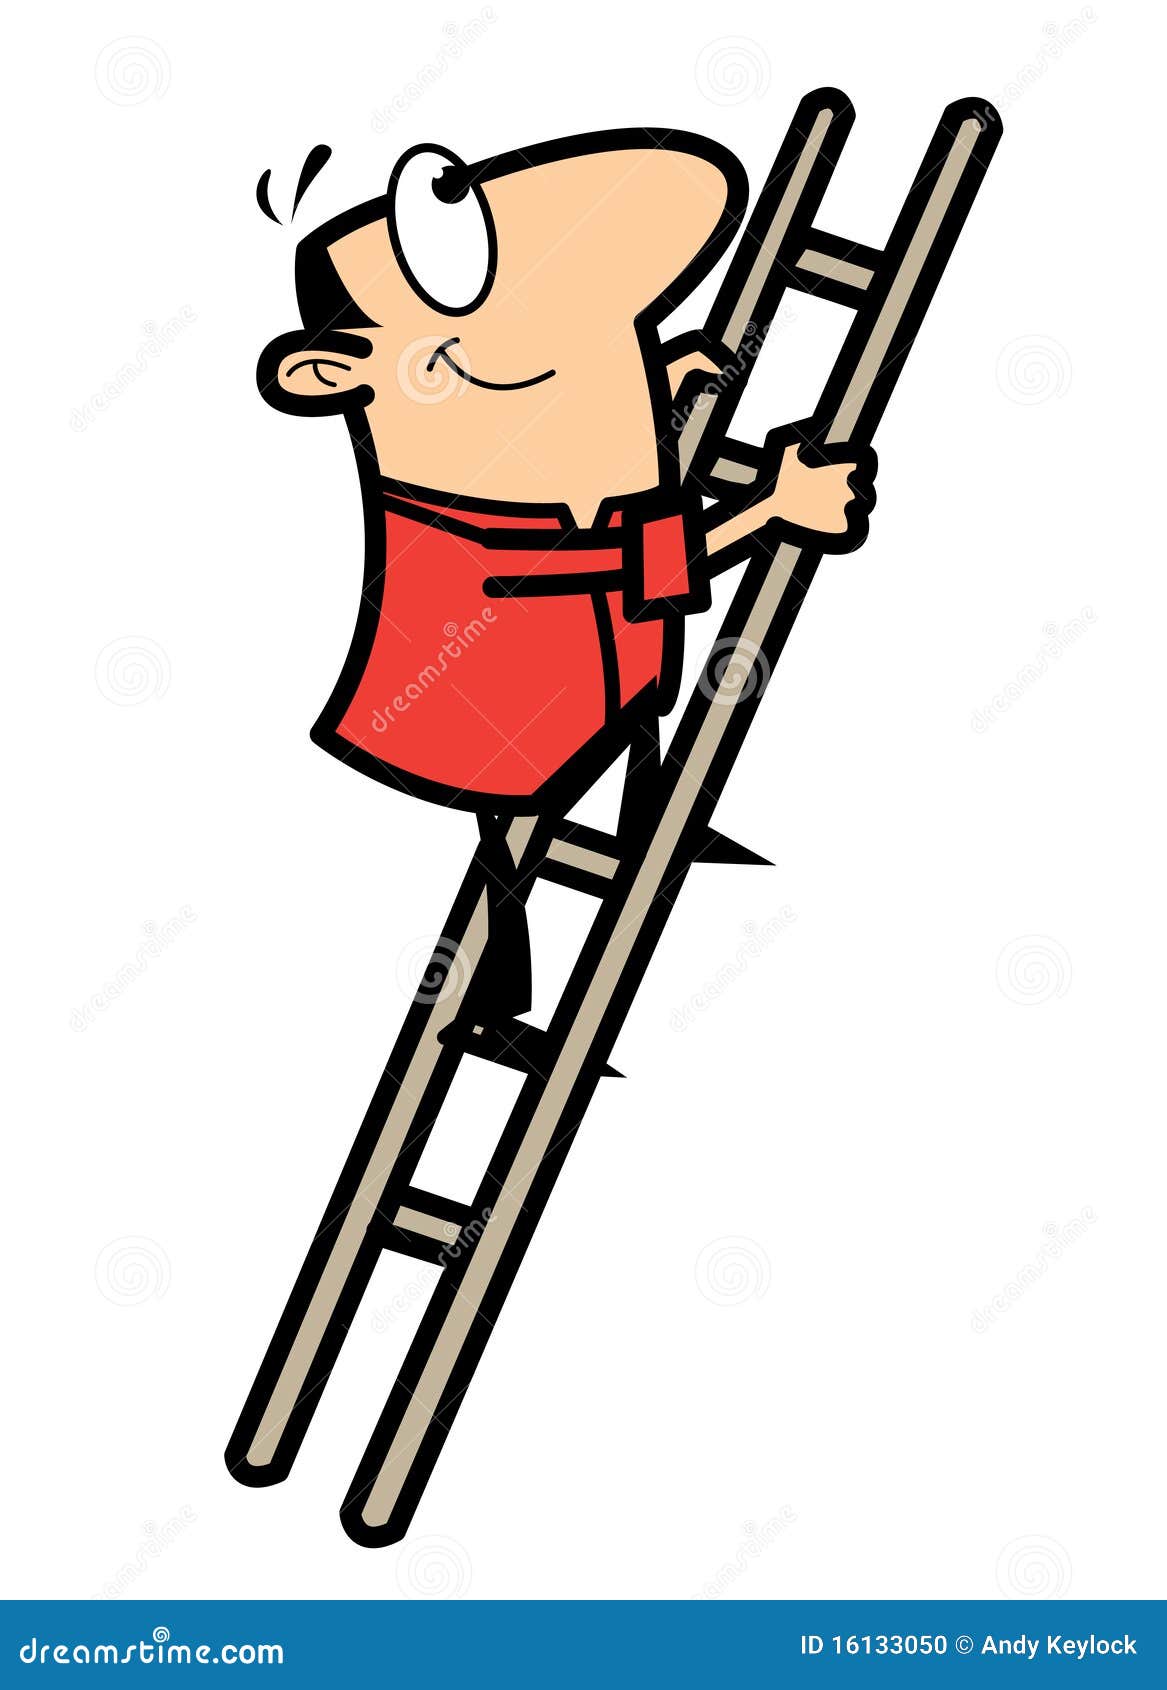 clipart man falling off ladder - photo #39